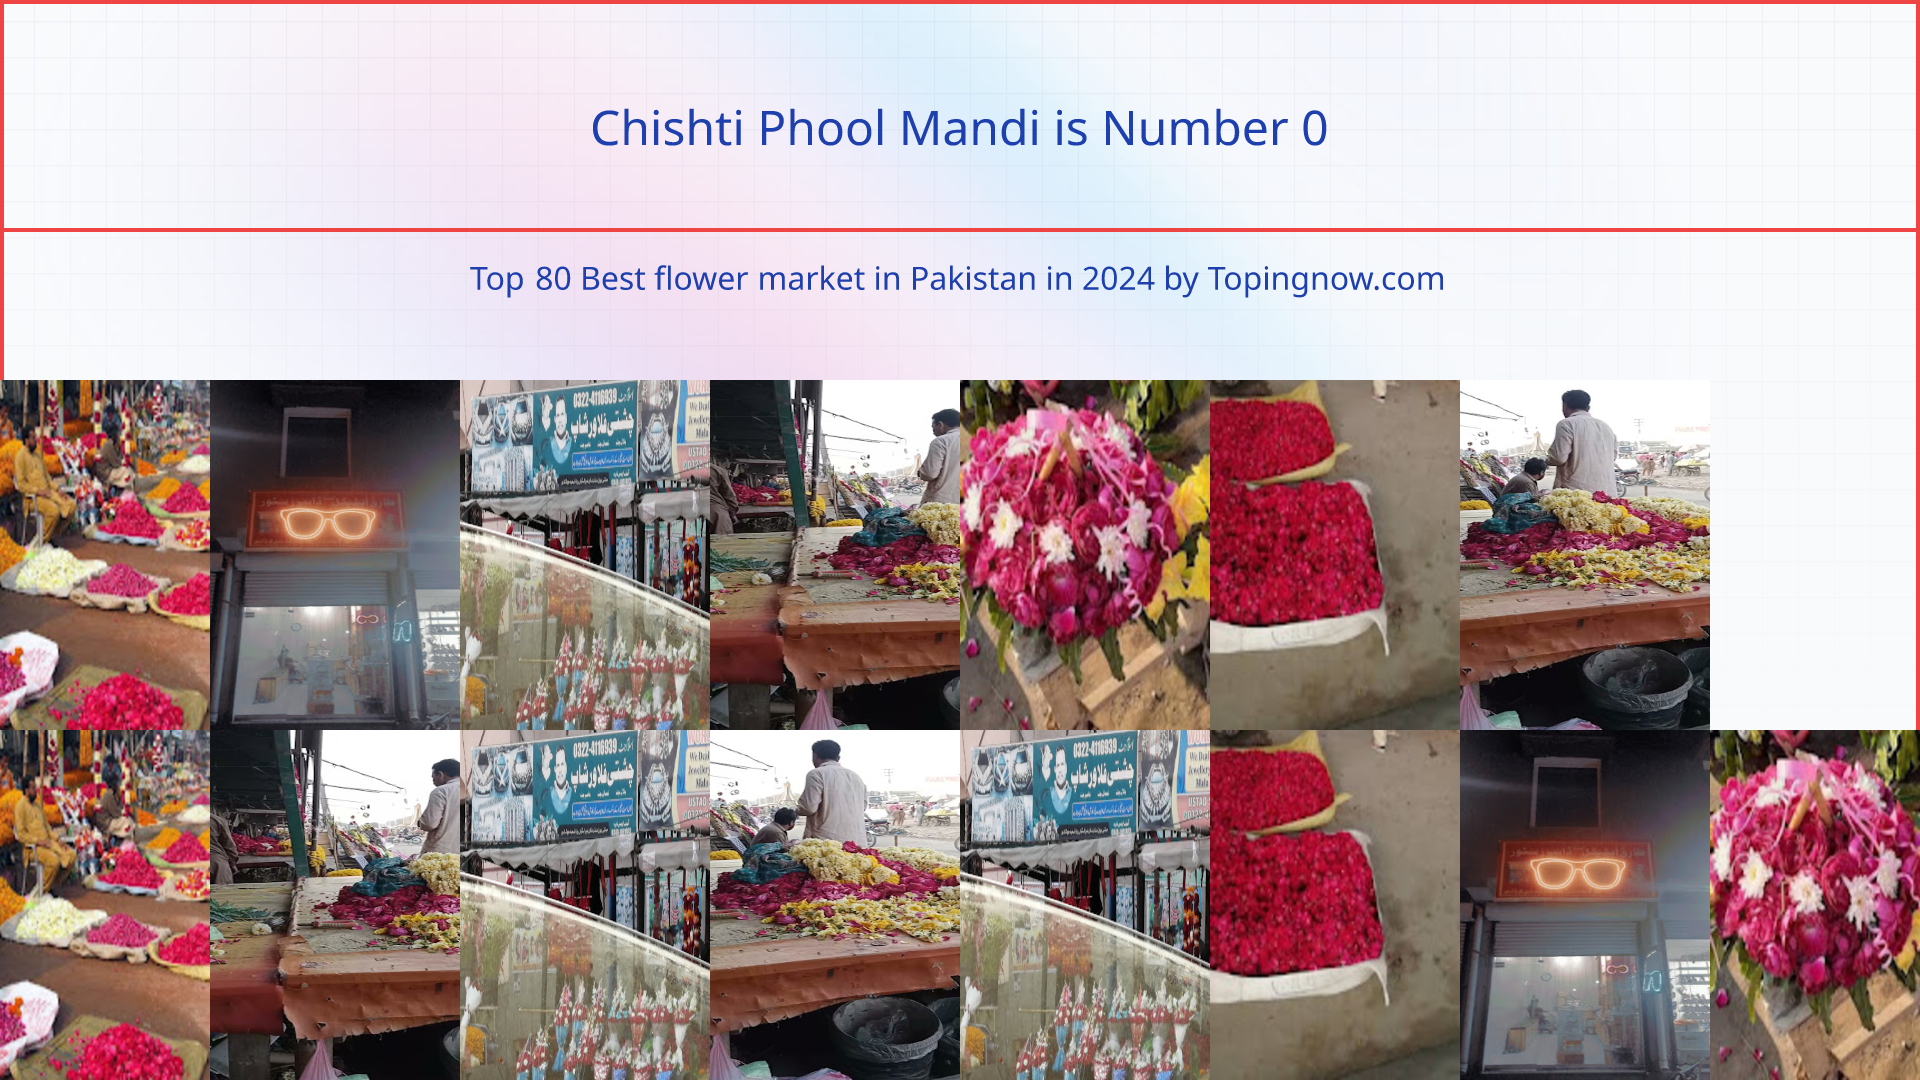 Chishti Phool Mandi: Top 80 Best flower market in Pakistan in 2024